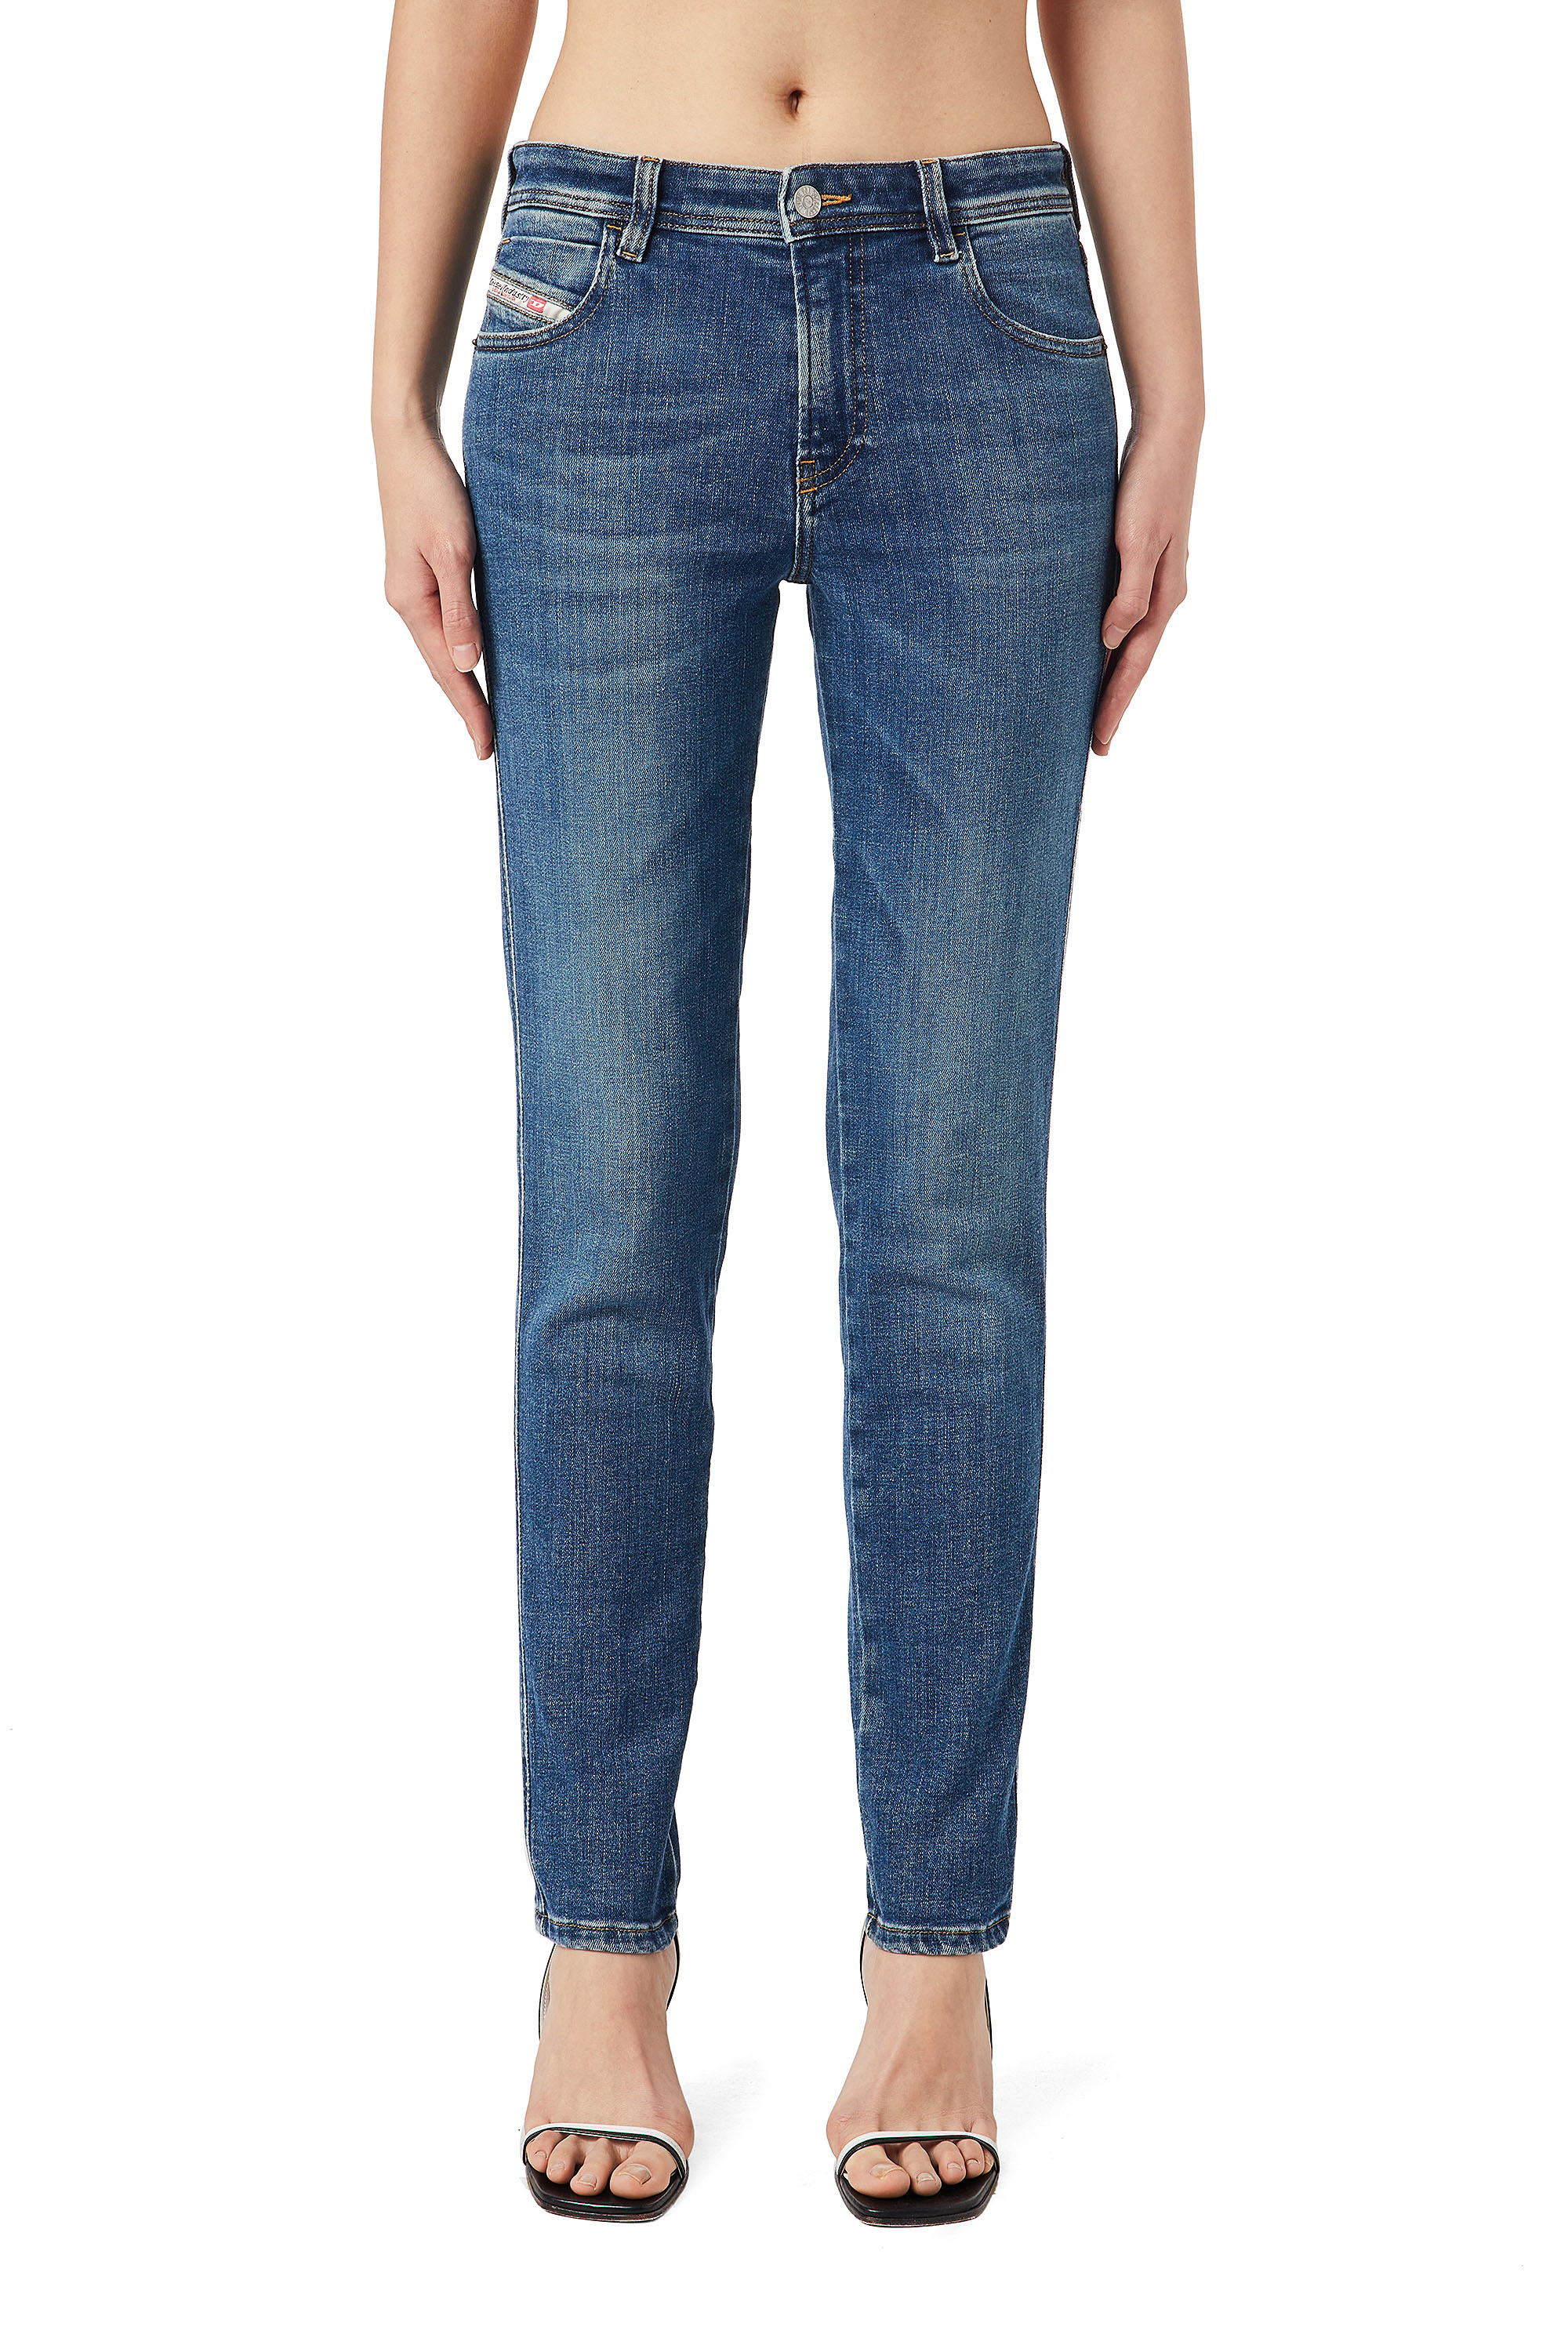 2015 BABHILA 09C59 Skinny Jeans, Bleu moyen - Jeans